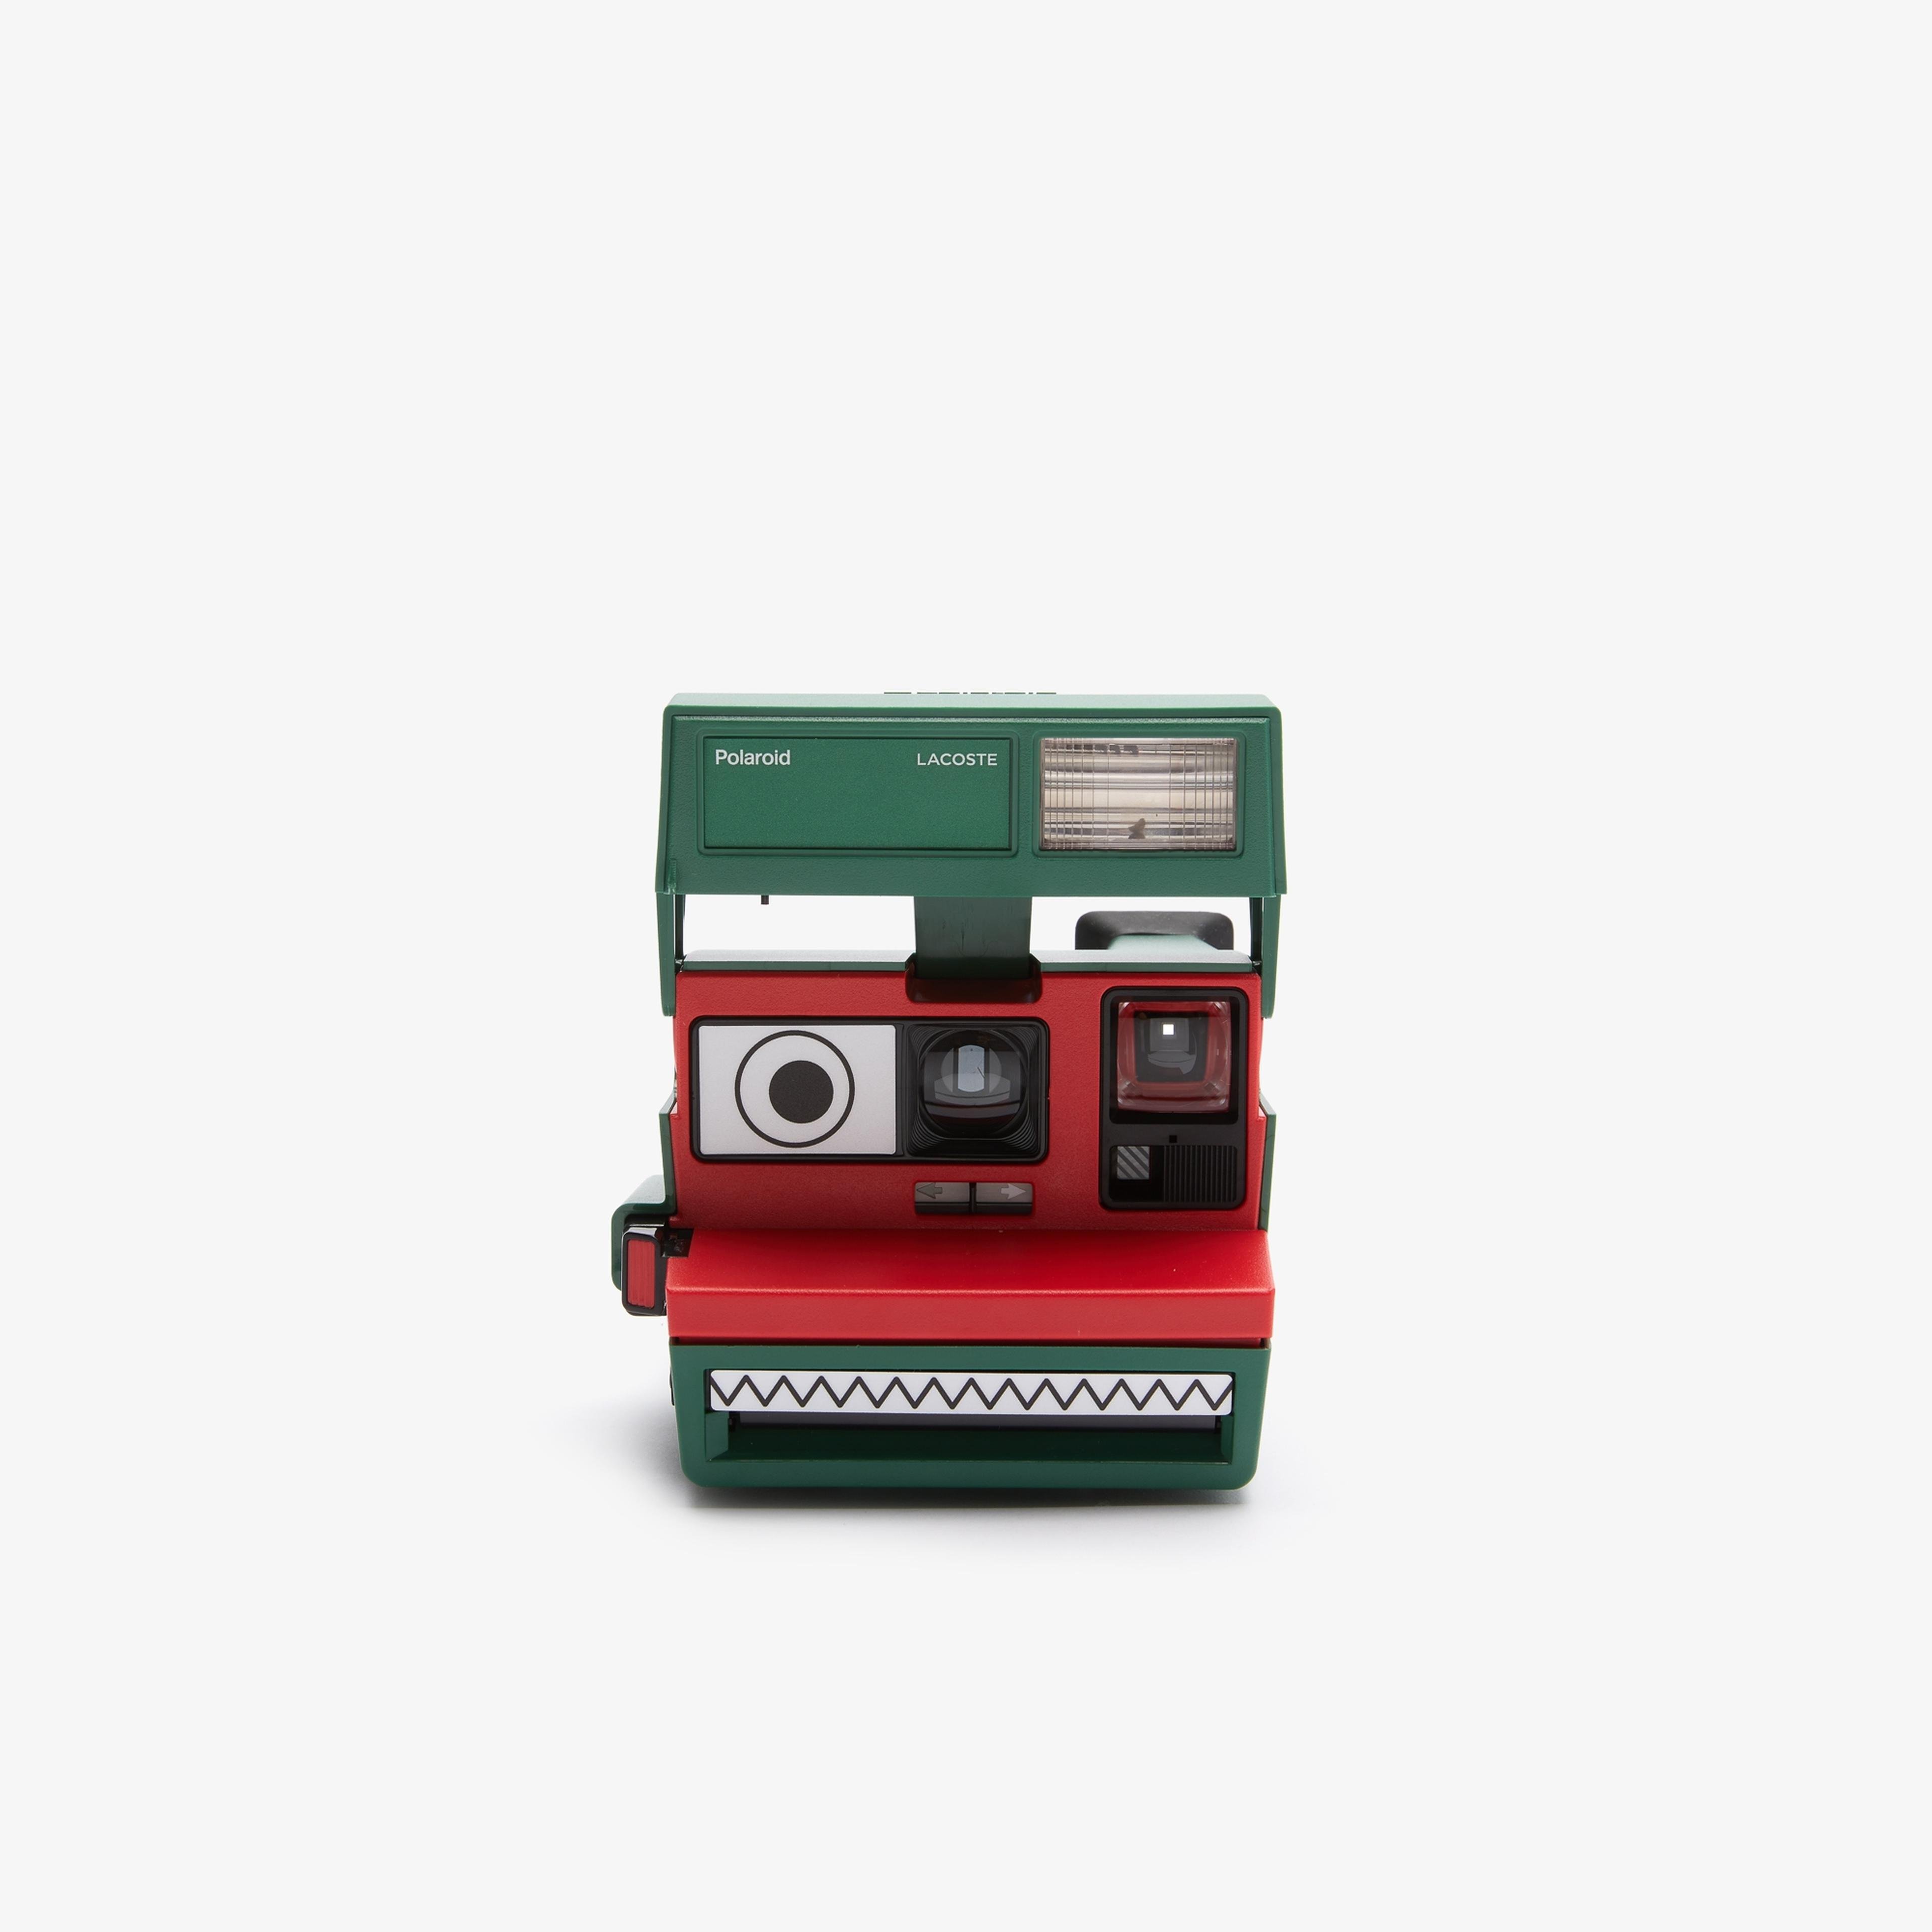 Lacoste x Polaroid Instant Unisex Renkli Fotoğraf Makinesi